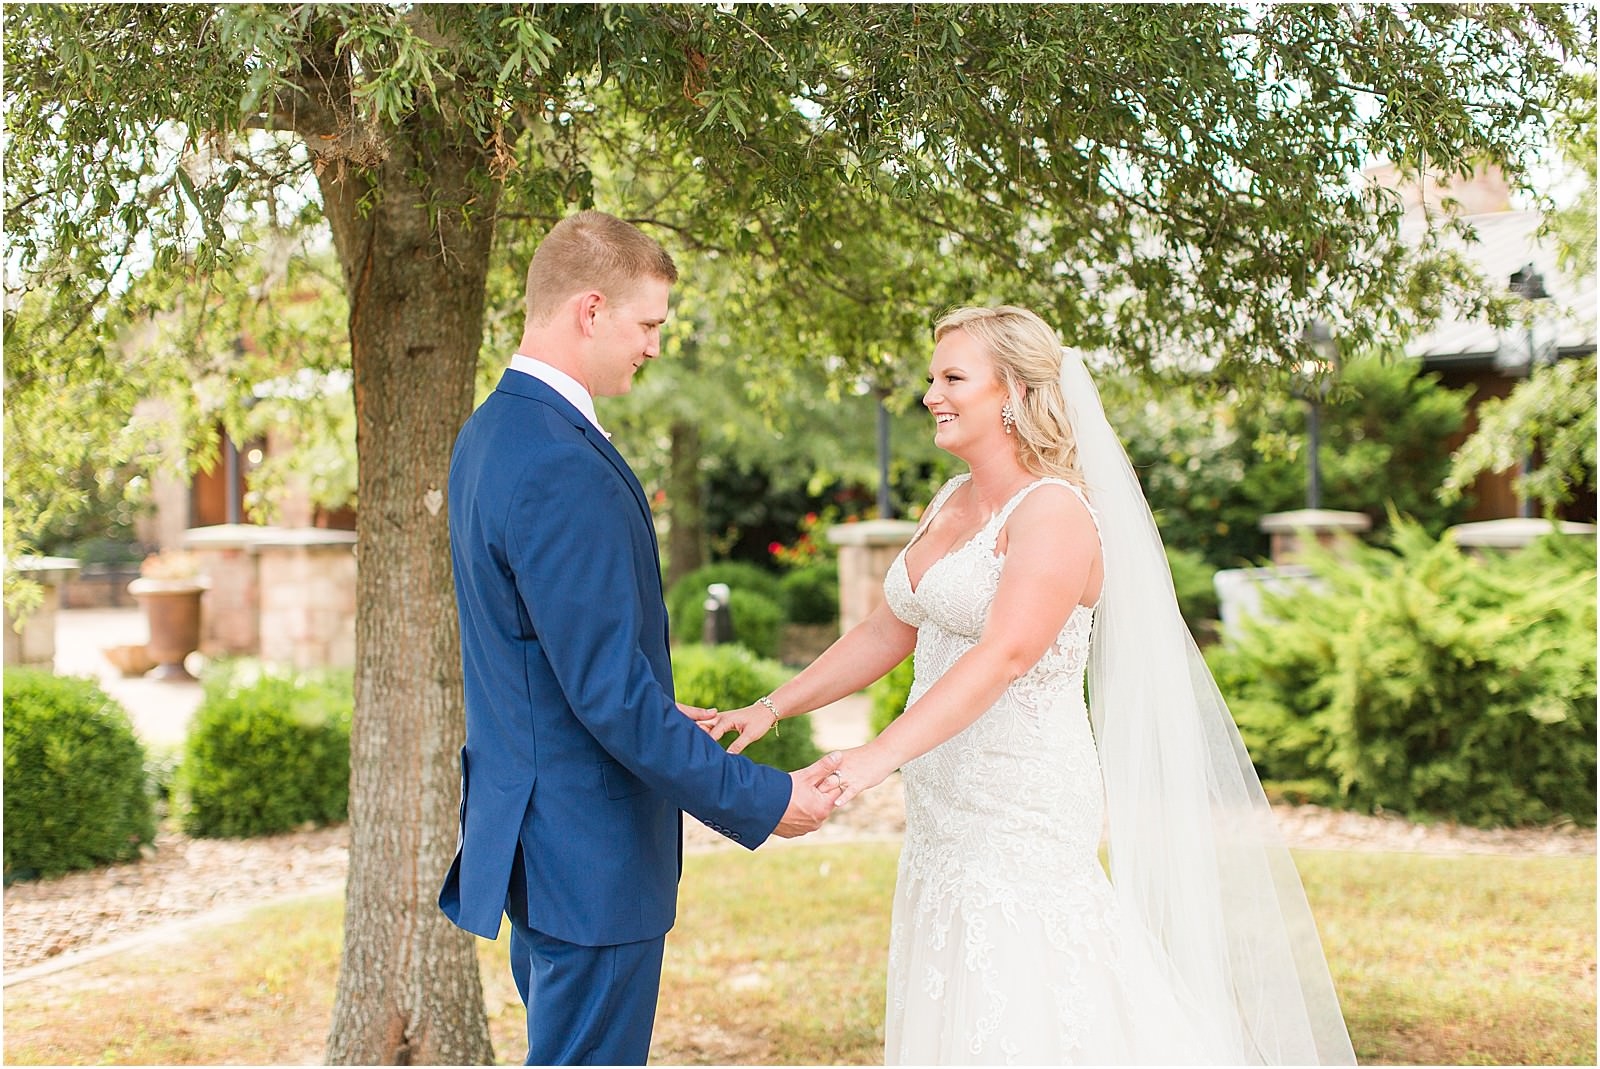 Kelsey and Caleb | Walkers Bluff Winery Wedding | Bret and Brandie Photography040.jpg